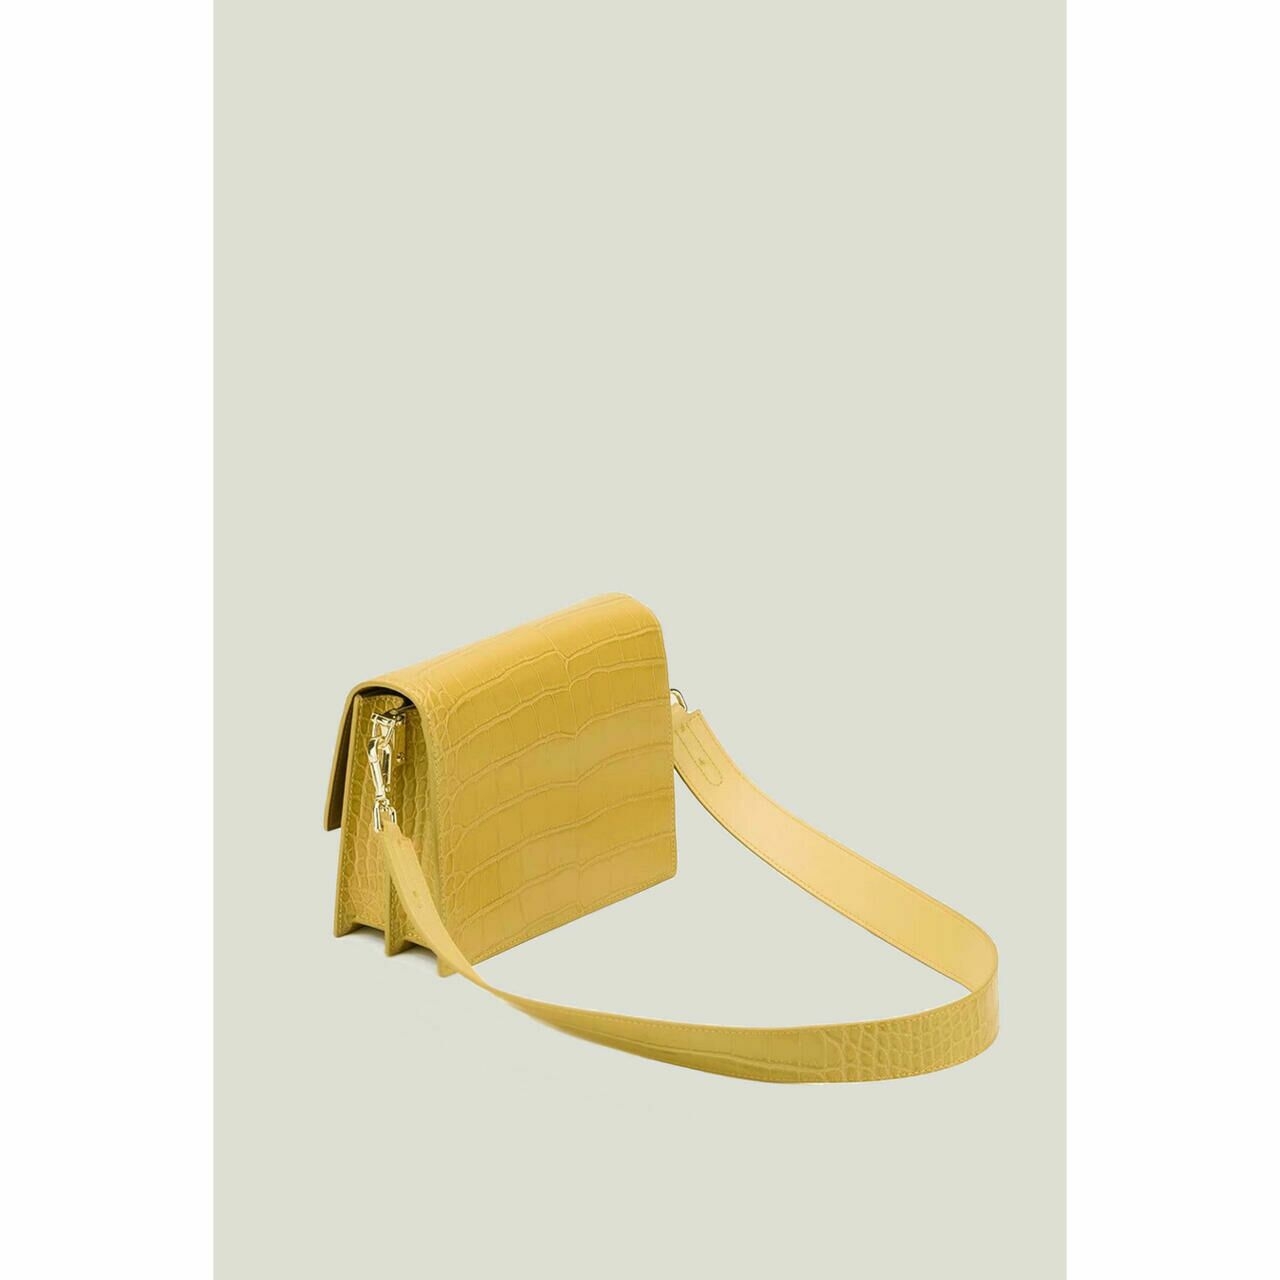 Jw pei Yellow Shoulder Bag